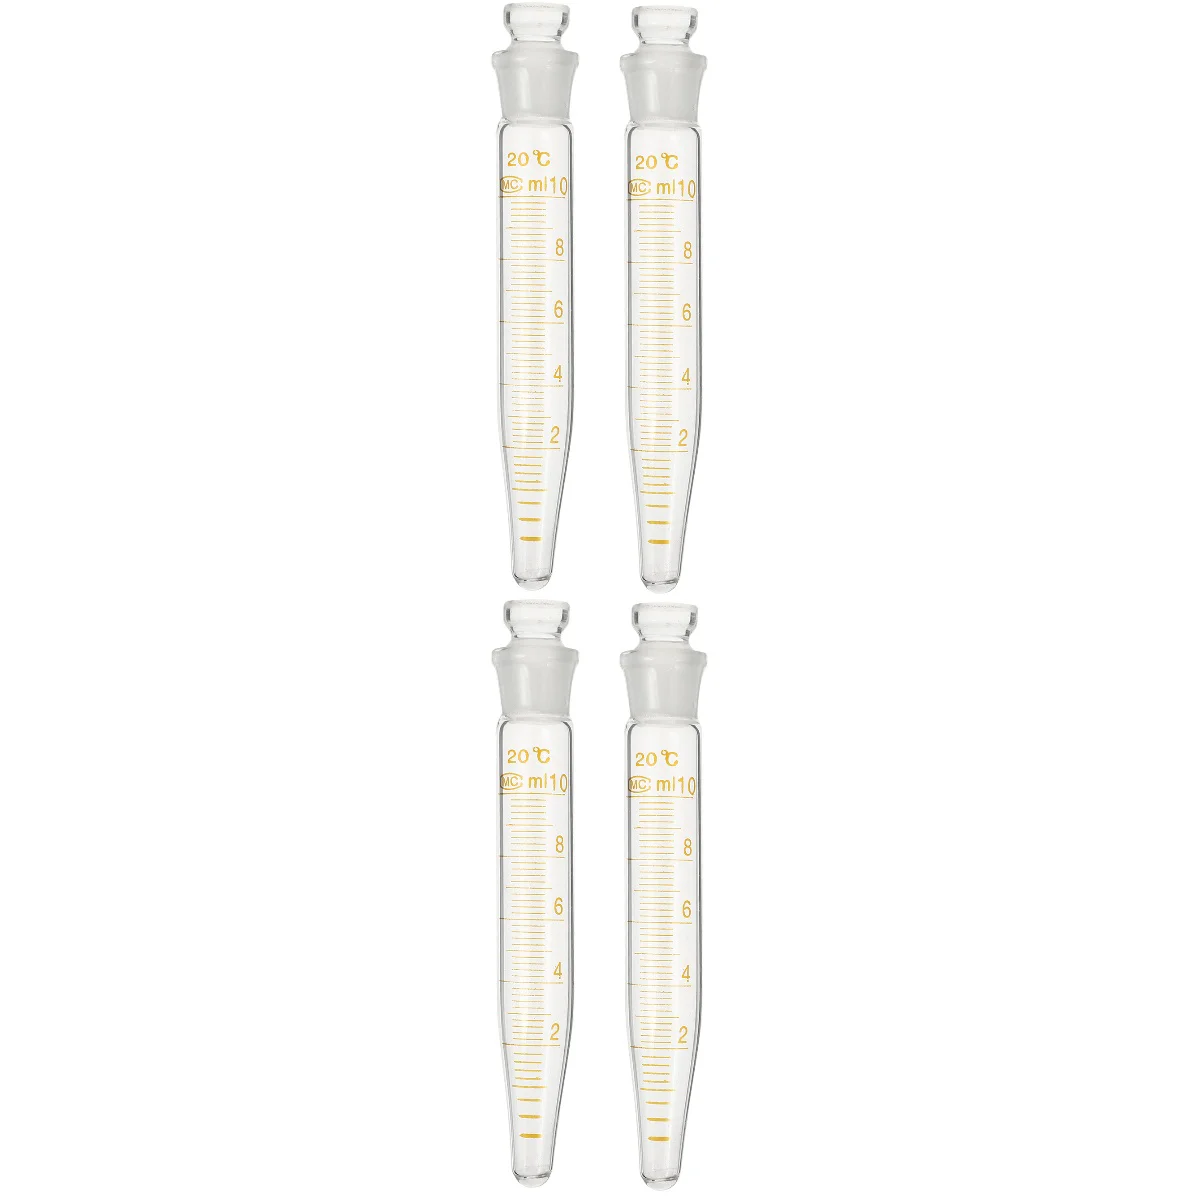 

4 Pcs Centrifuge Tube Test Laboratory Experiment Glass Tubes Science Centrifugal Vials Scale 10ml